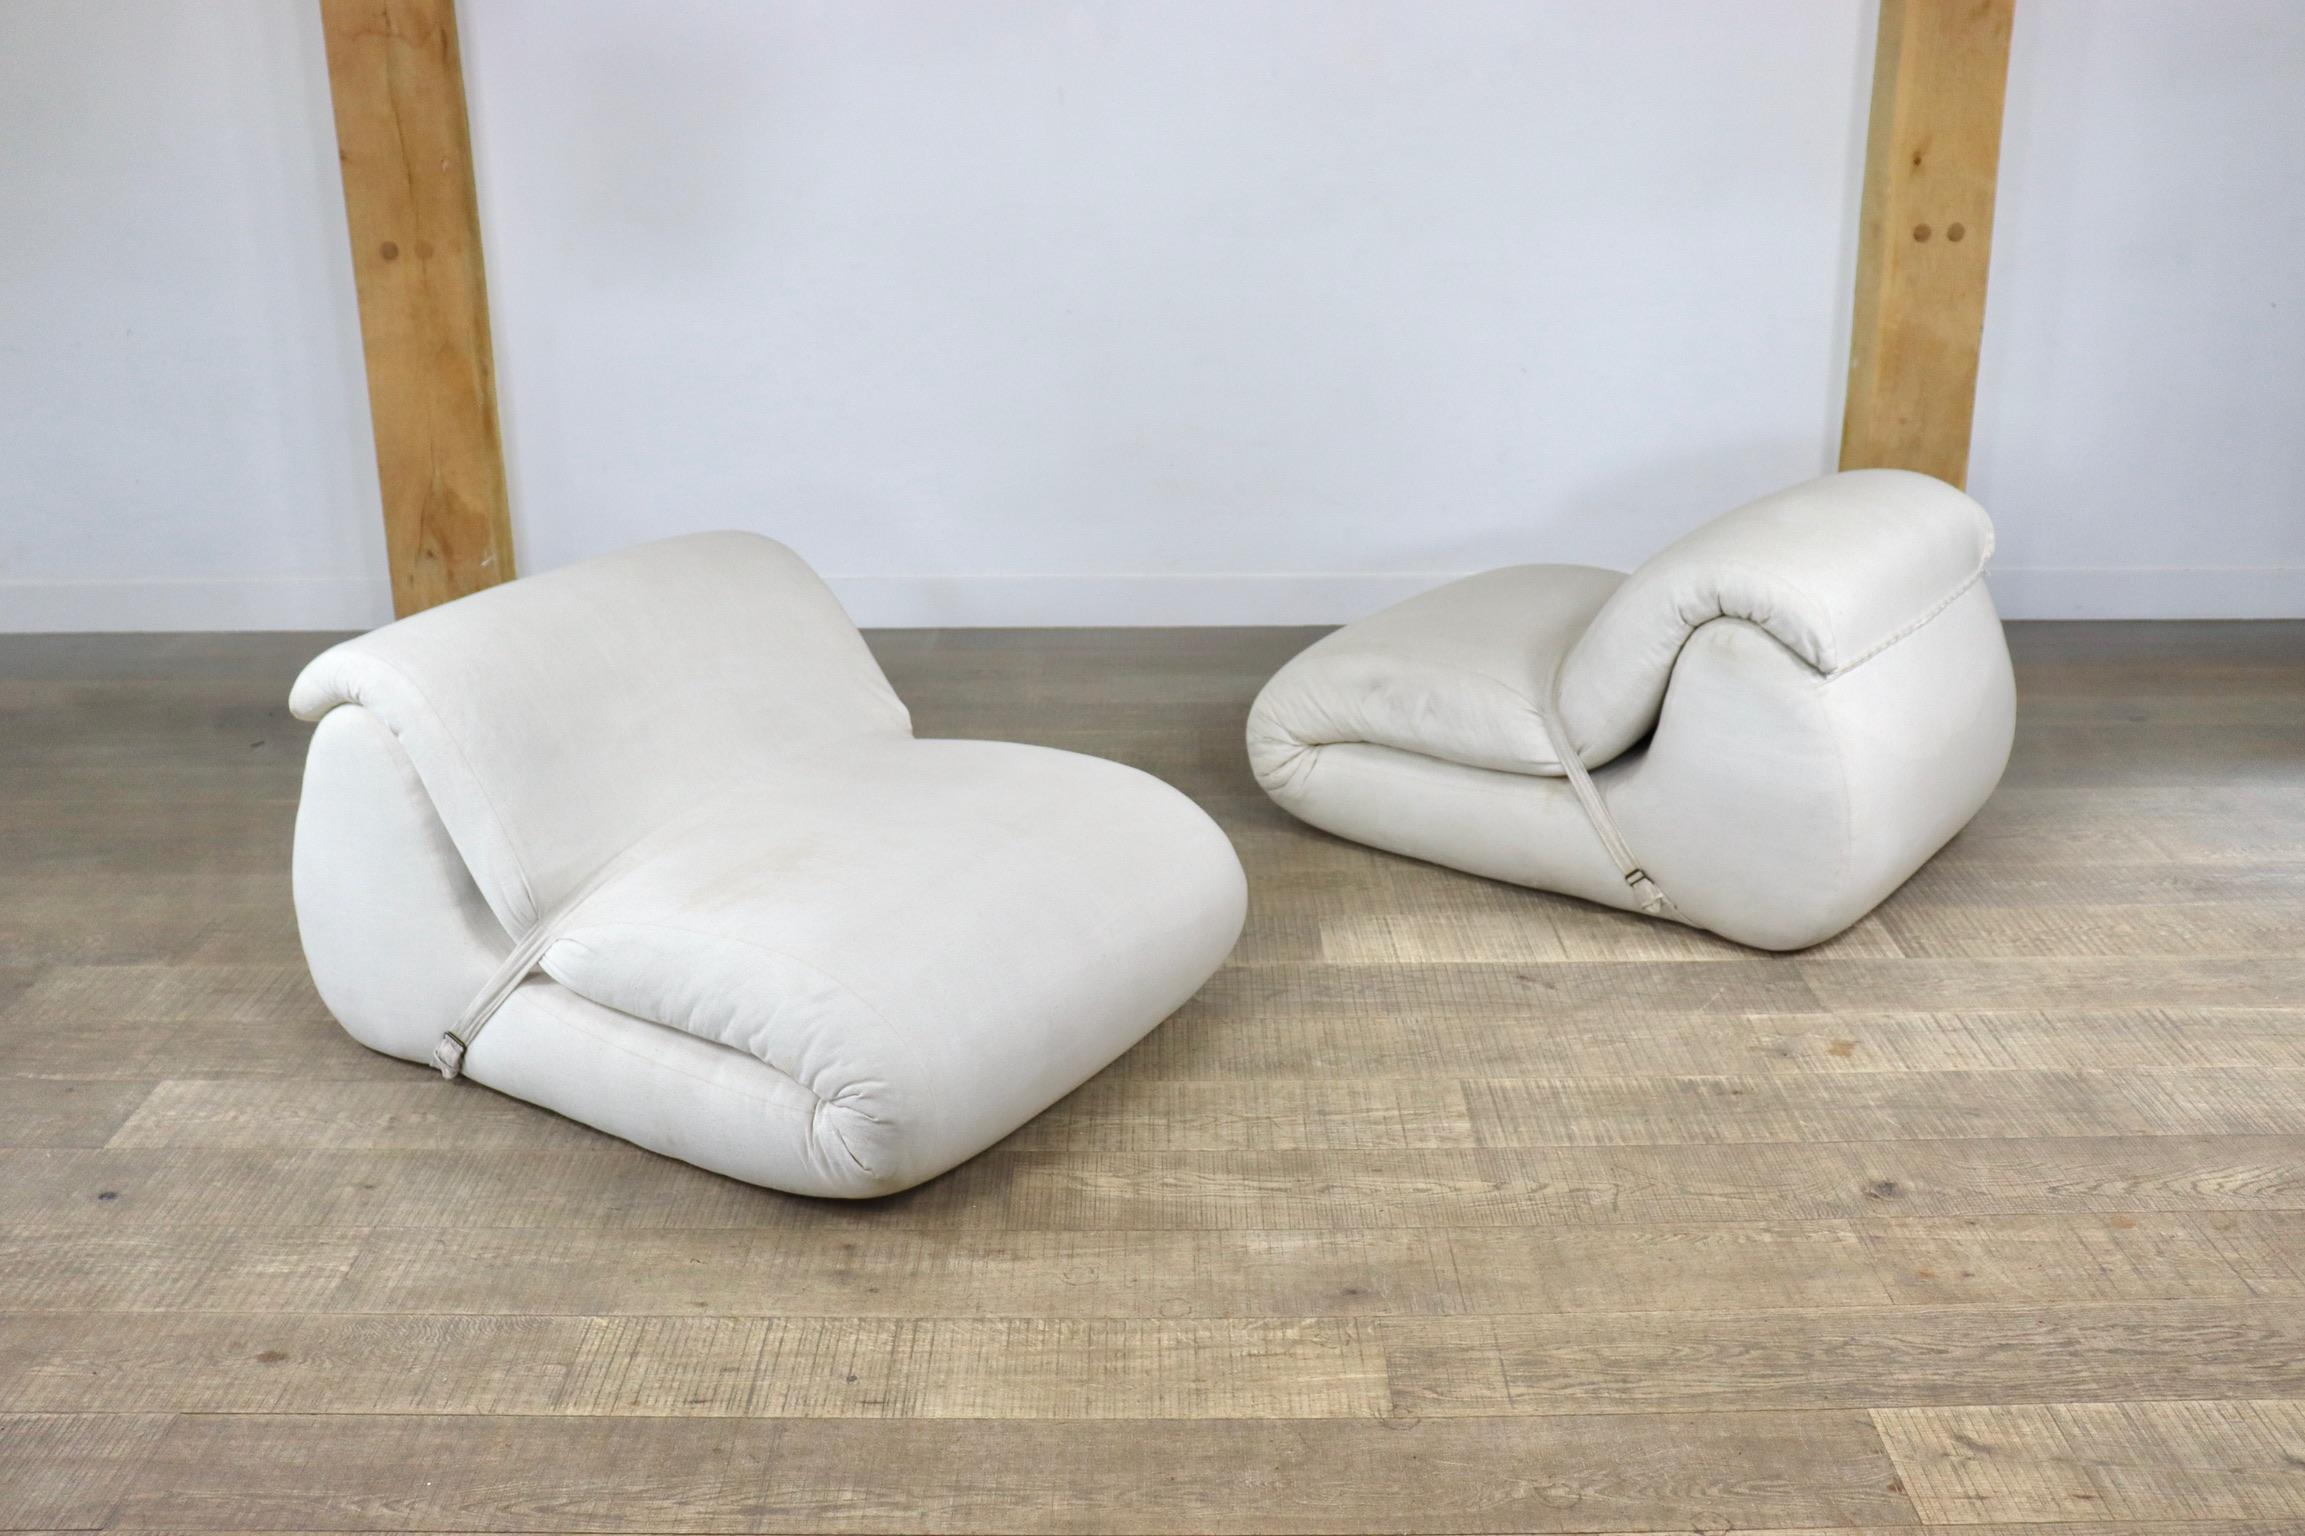 Pair of Ghiro Convertible lounge chairs by Umberto Catalano and Gianfranco Masi, 2